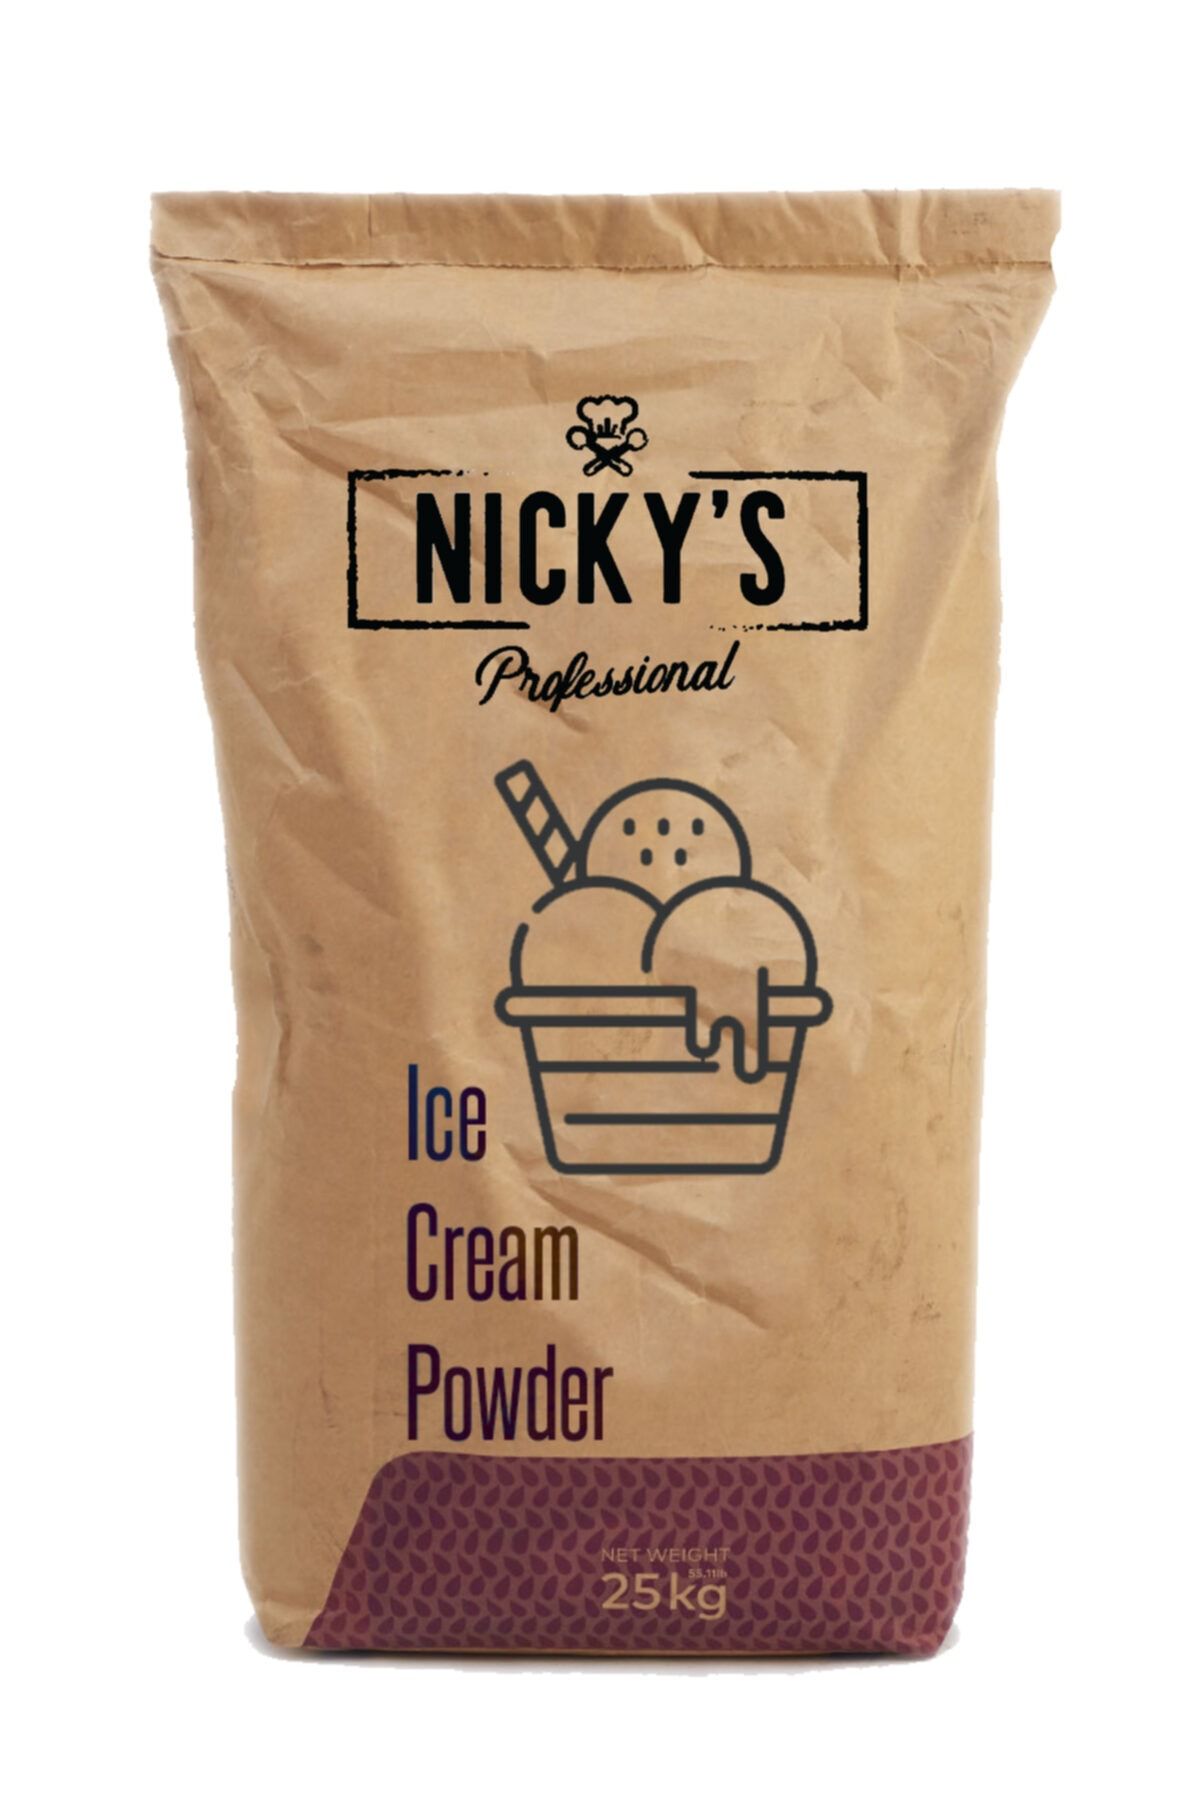 Nickys Professional Nicky's Profsseional Süt Bazlı Vanilyalı Sert Dondurma Tozu 25 Kg